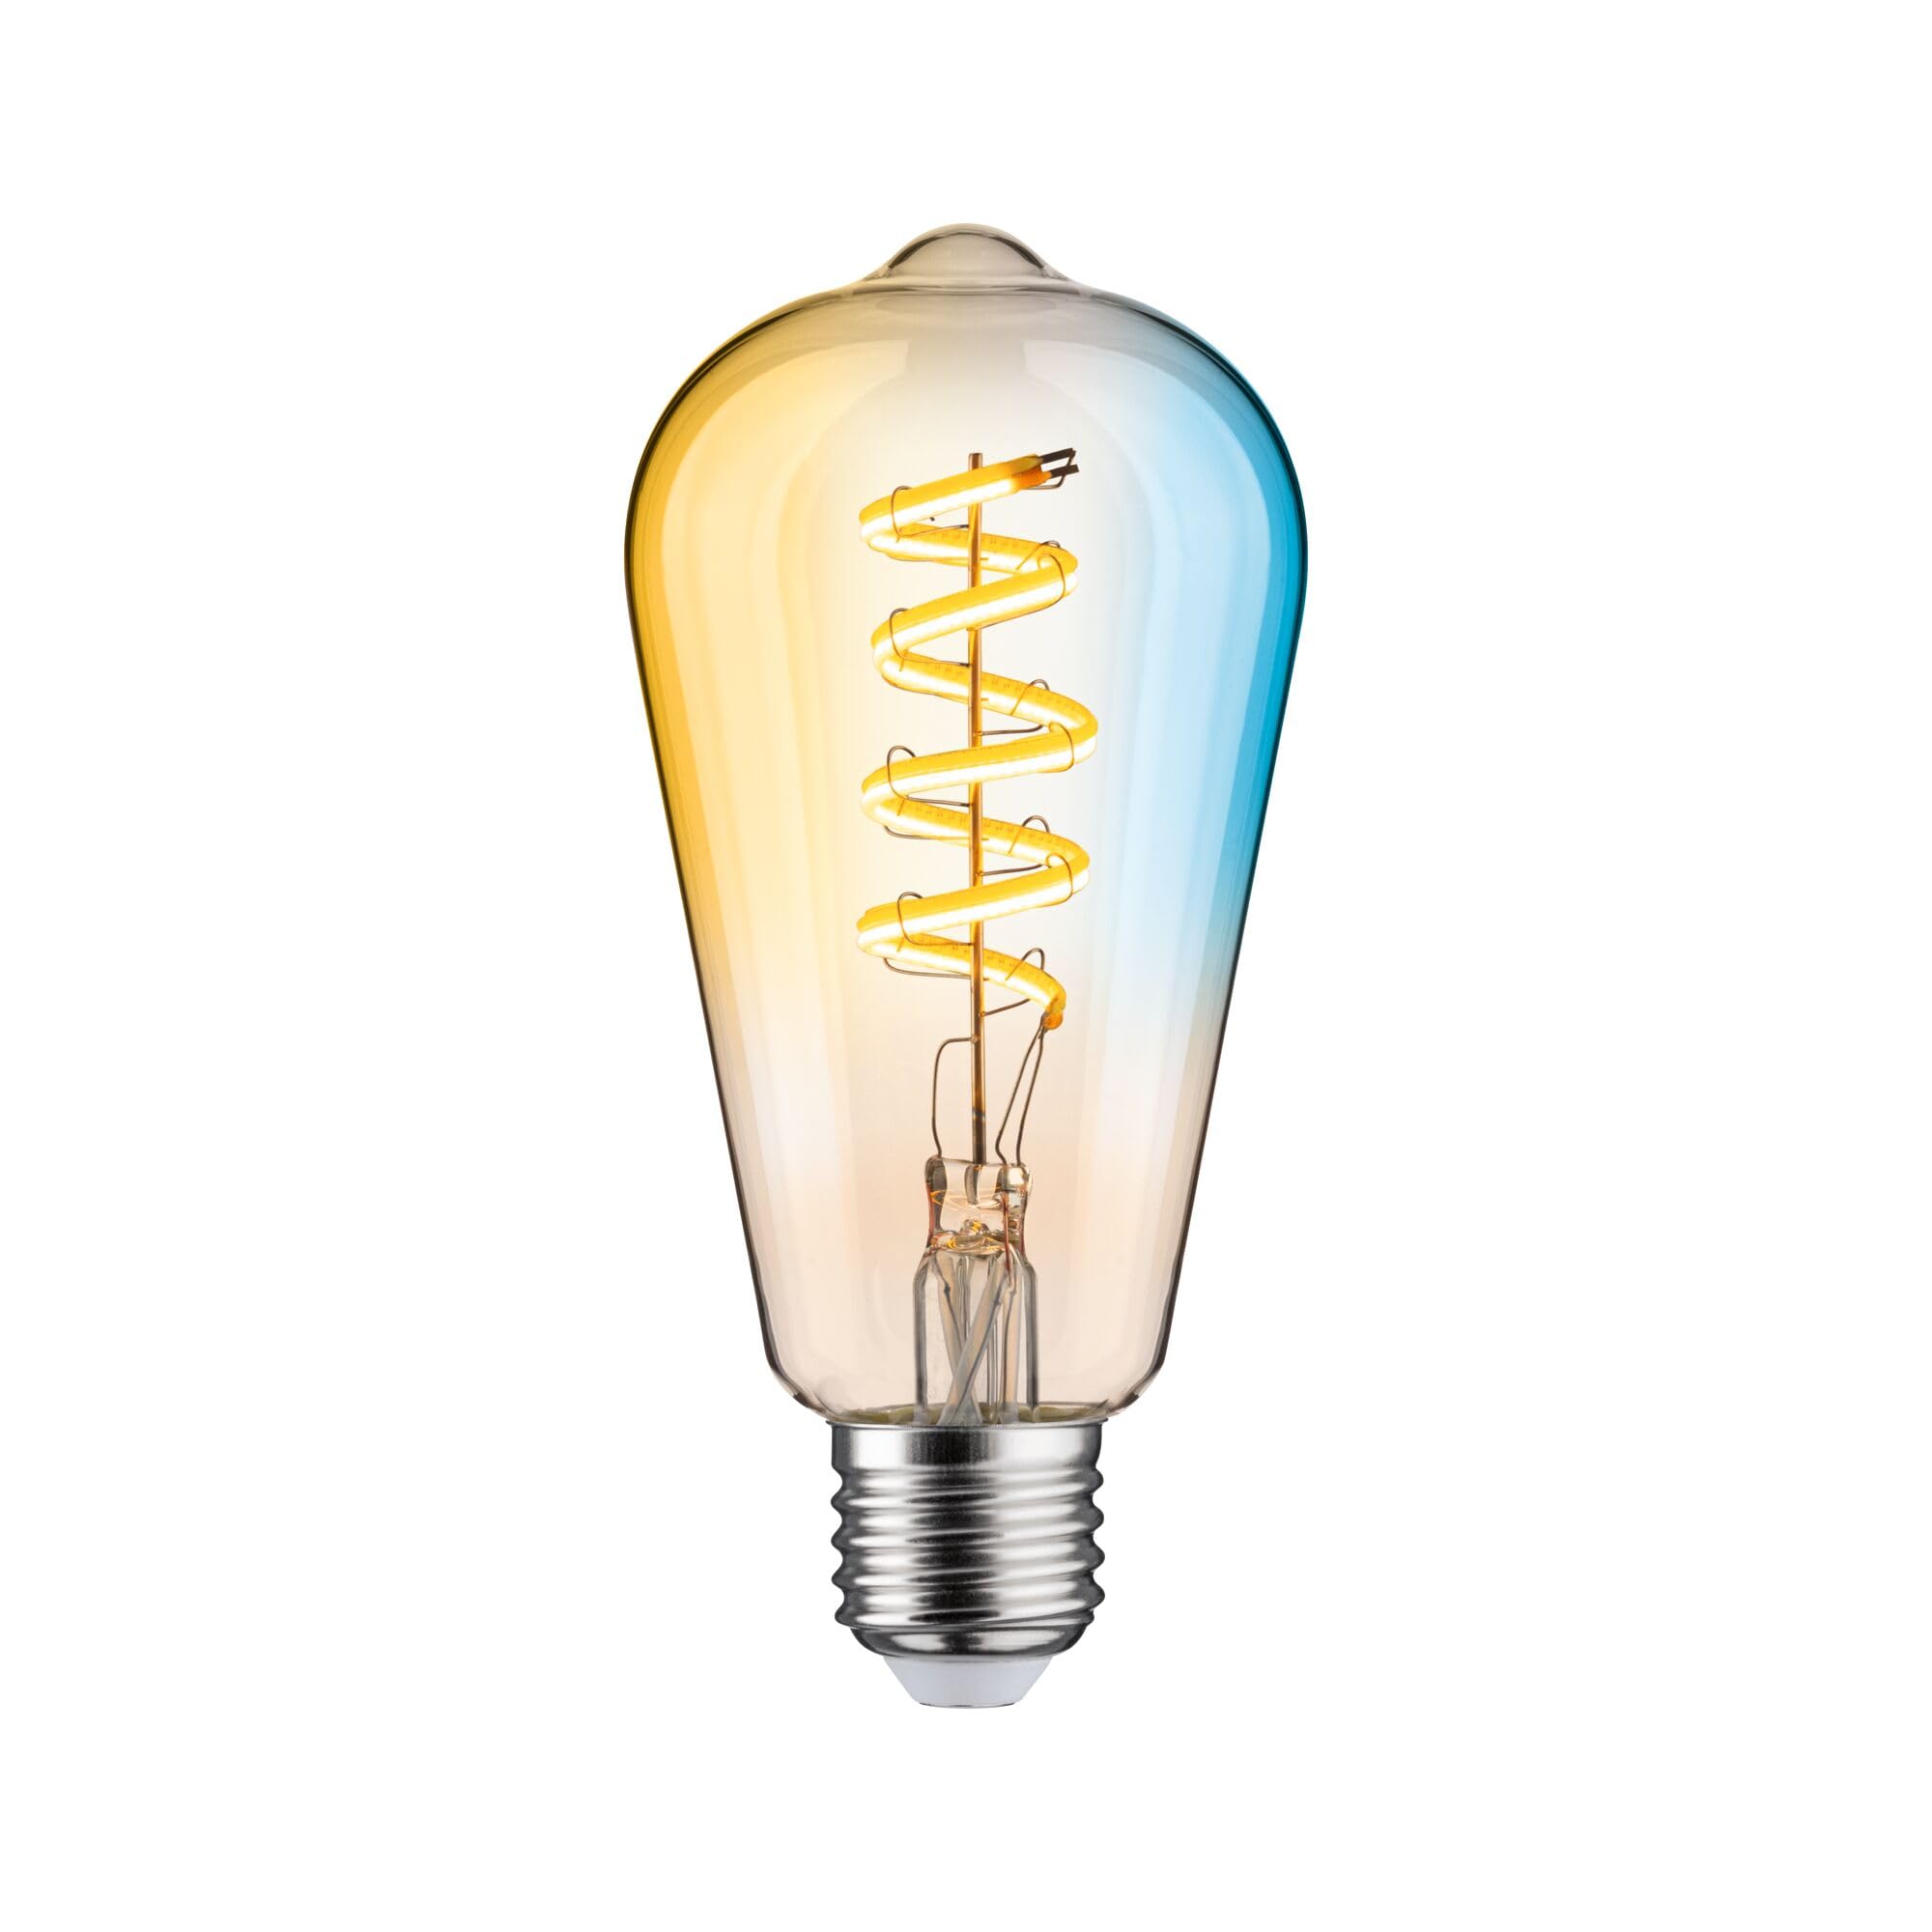 Paulmann 29157 Filament 230V Smart Home Zigbee LED Kolben ST64 E27 600lm 7,5W Tunable White dimmbar Gold Leuchtmittel, Einzelpack